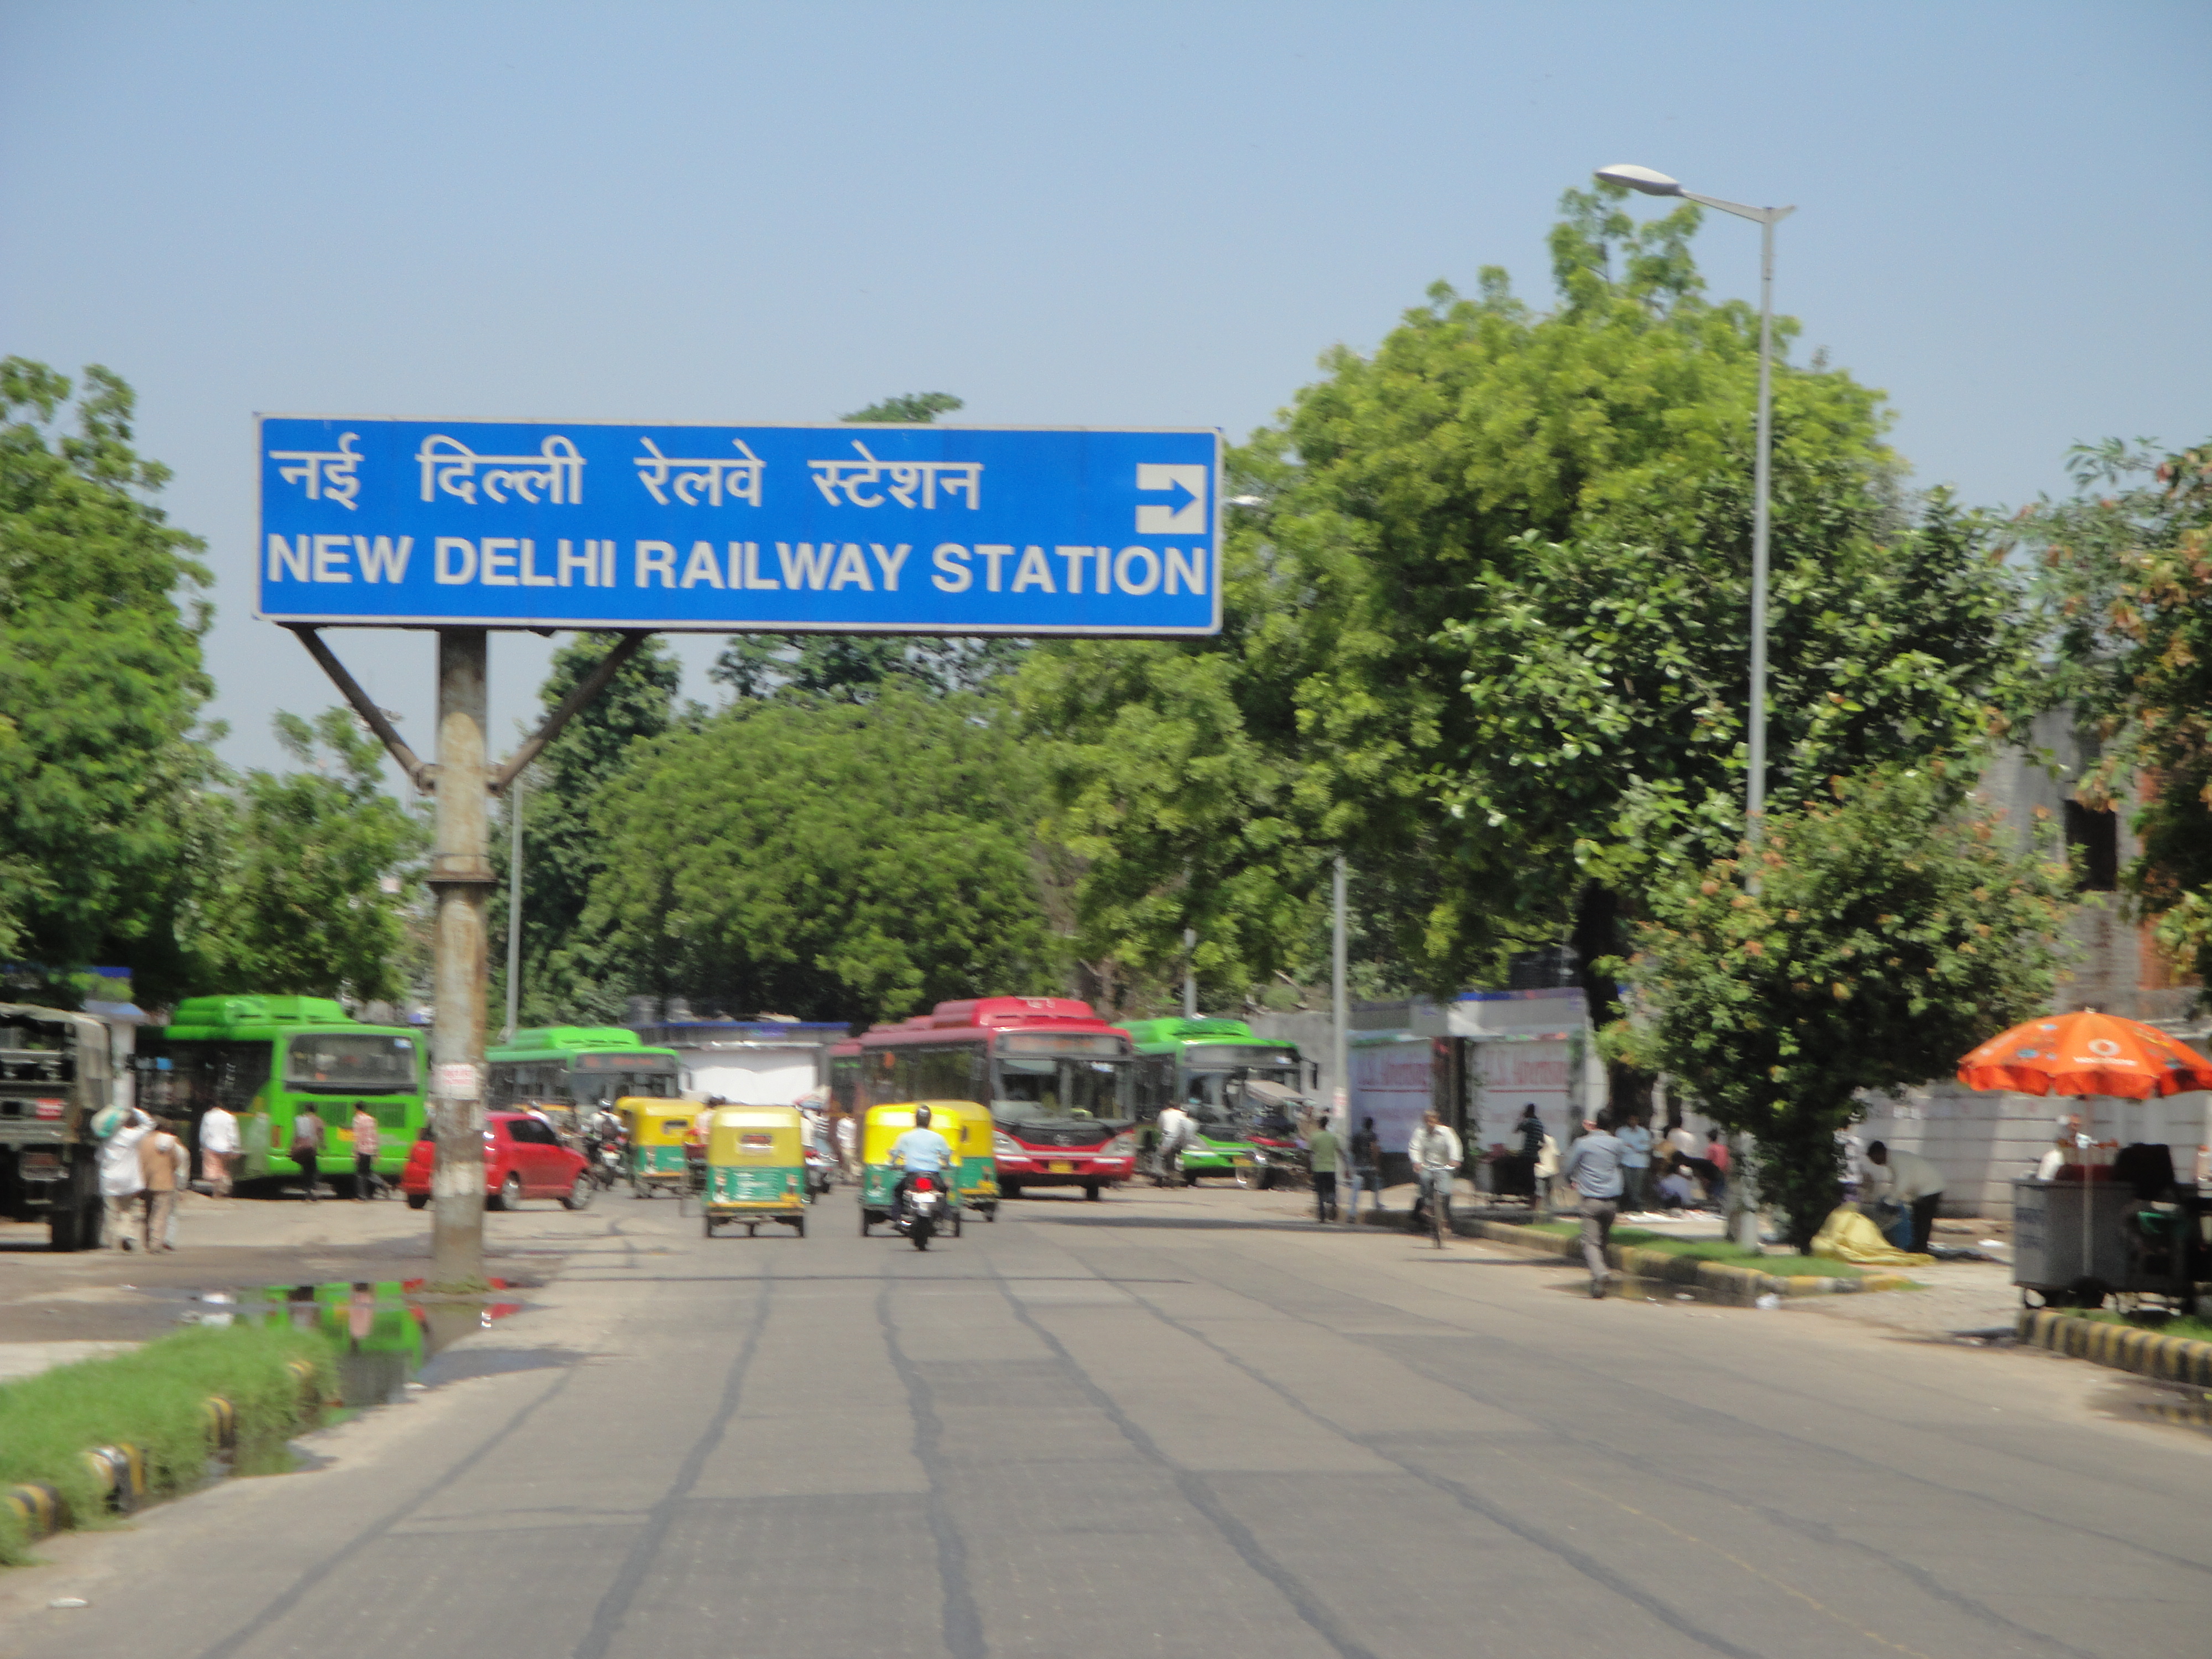 New Delhi Main Railway Station, India Image